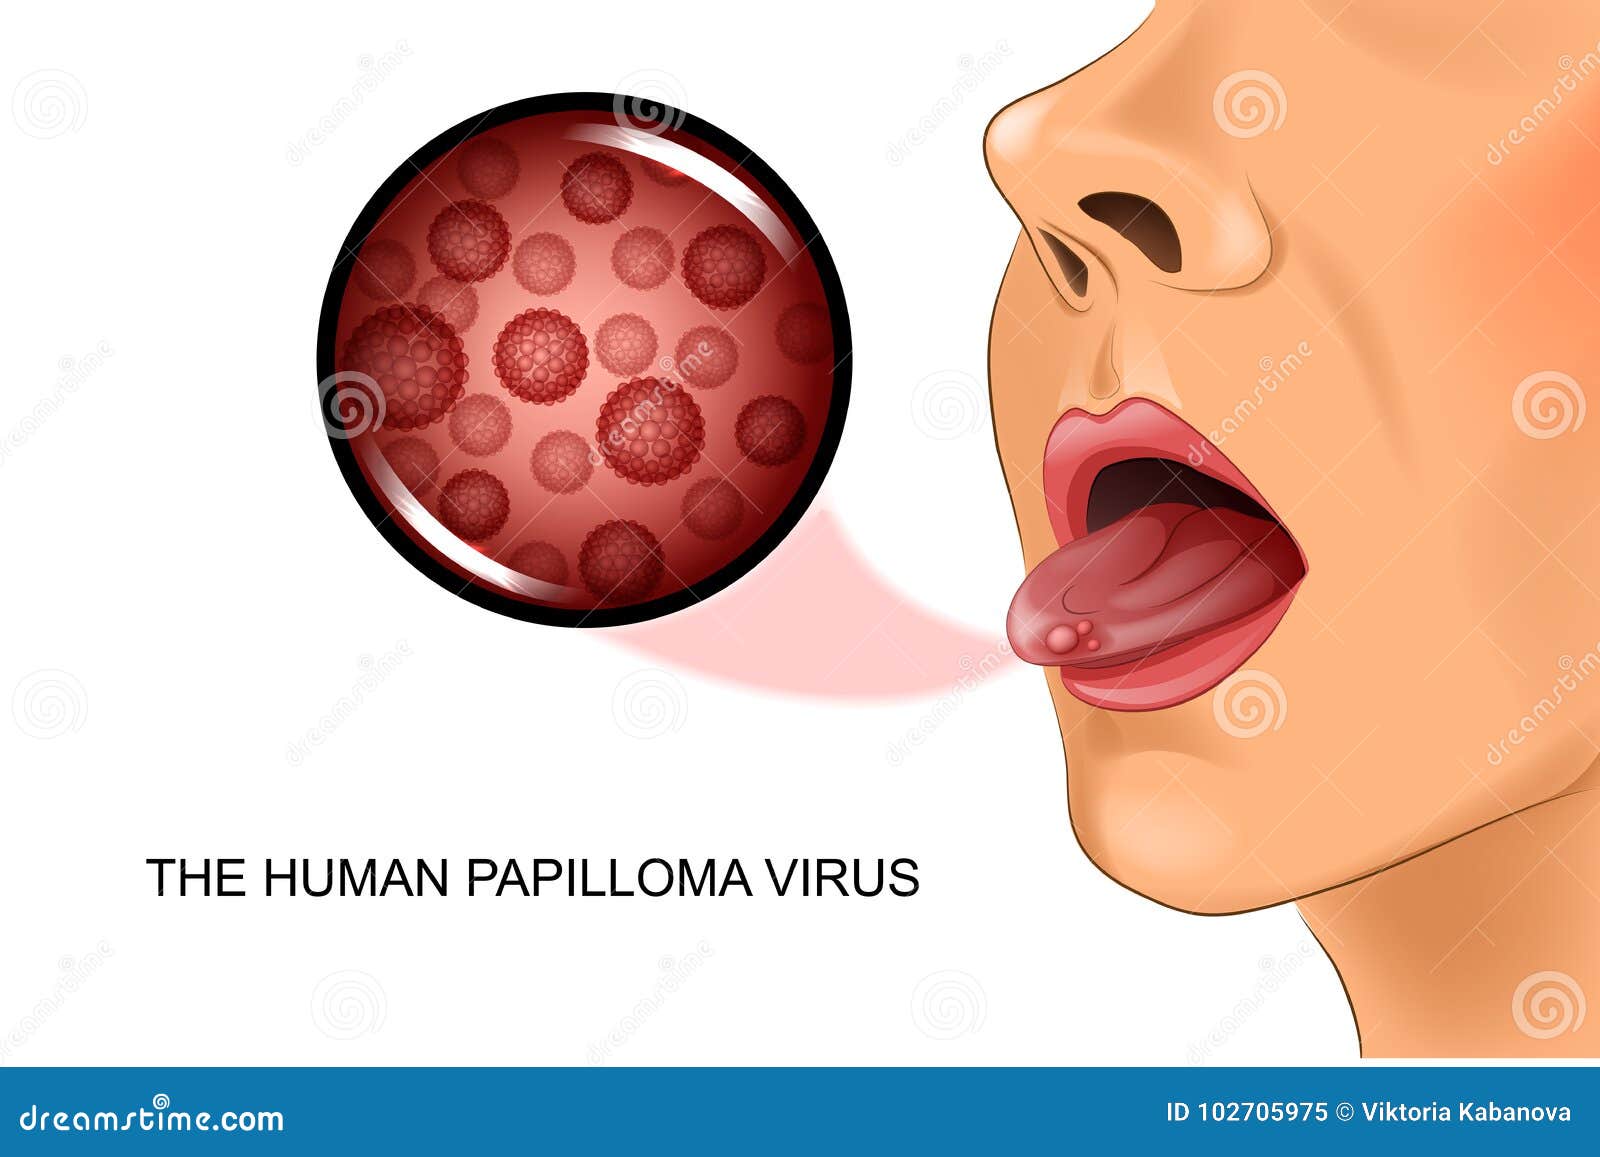 Hpv langue symptome, Papillomavirus comment attraper